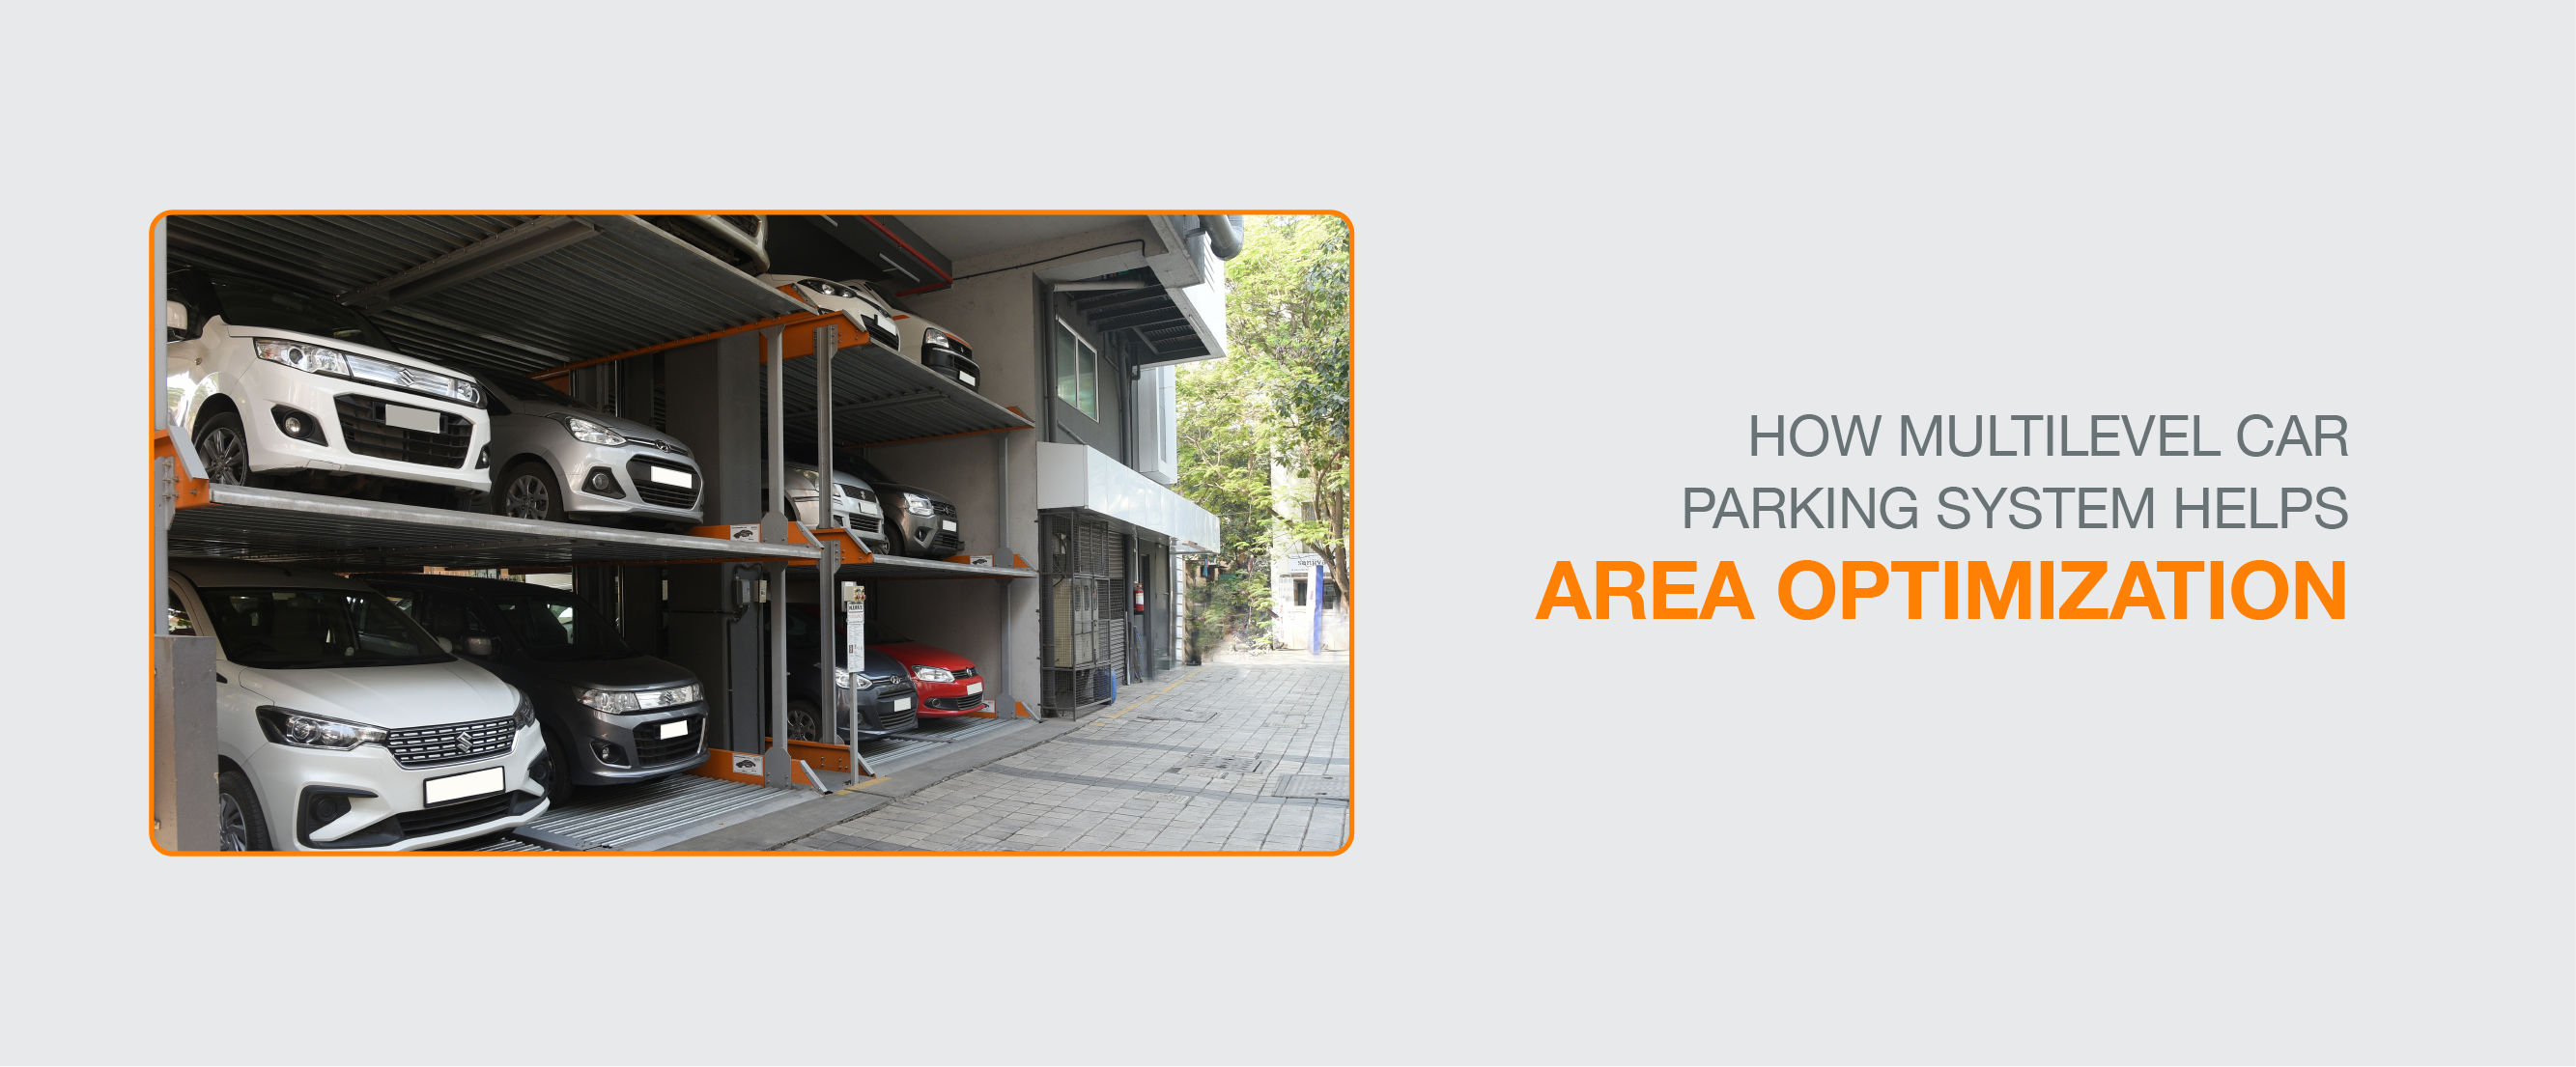 How Multilevel Car Parking System Helps Area Optimization